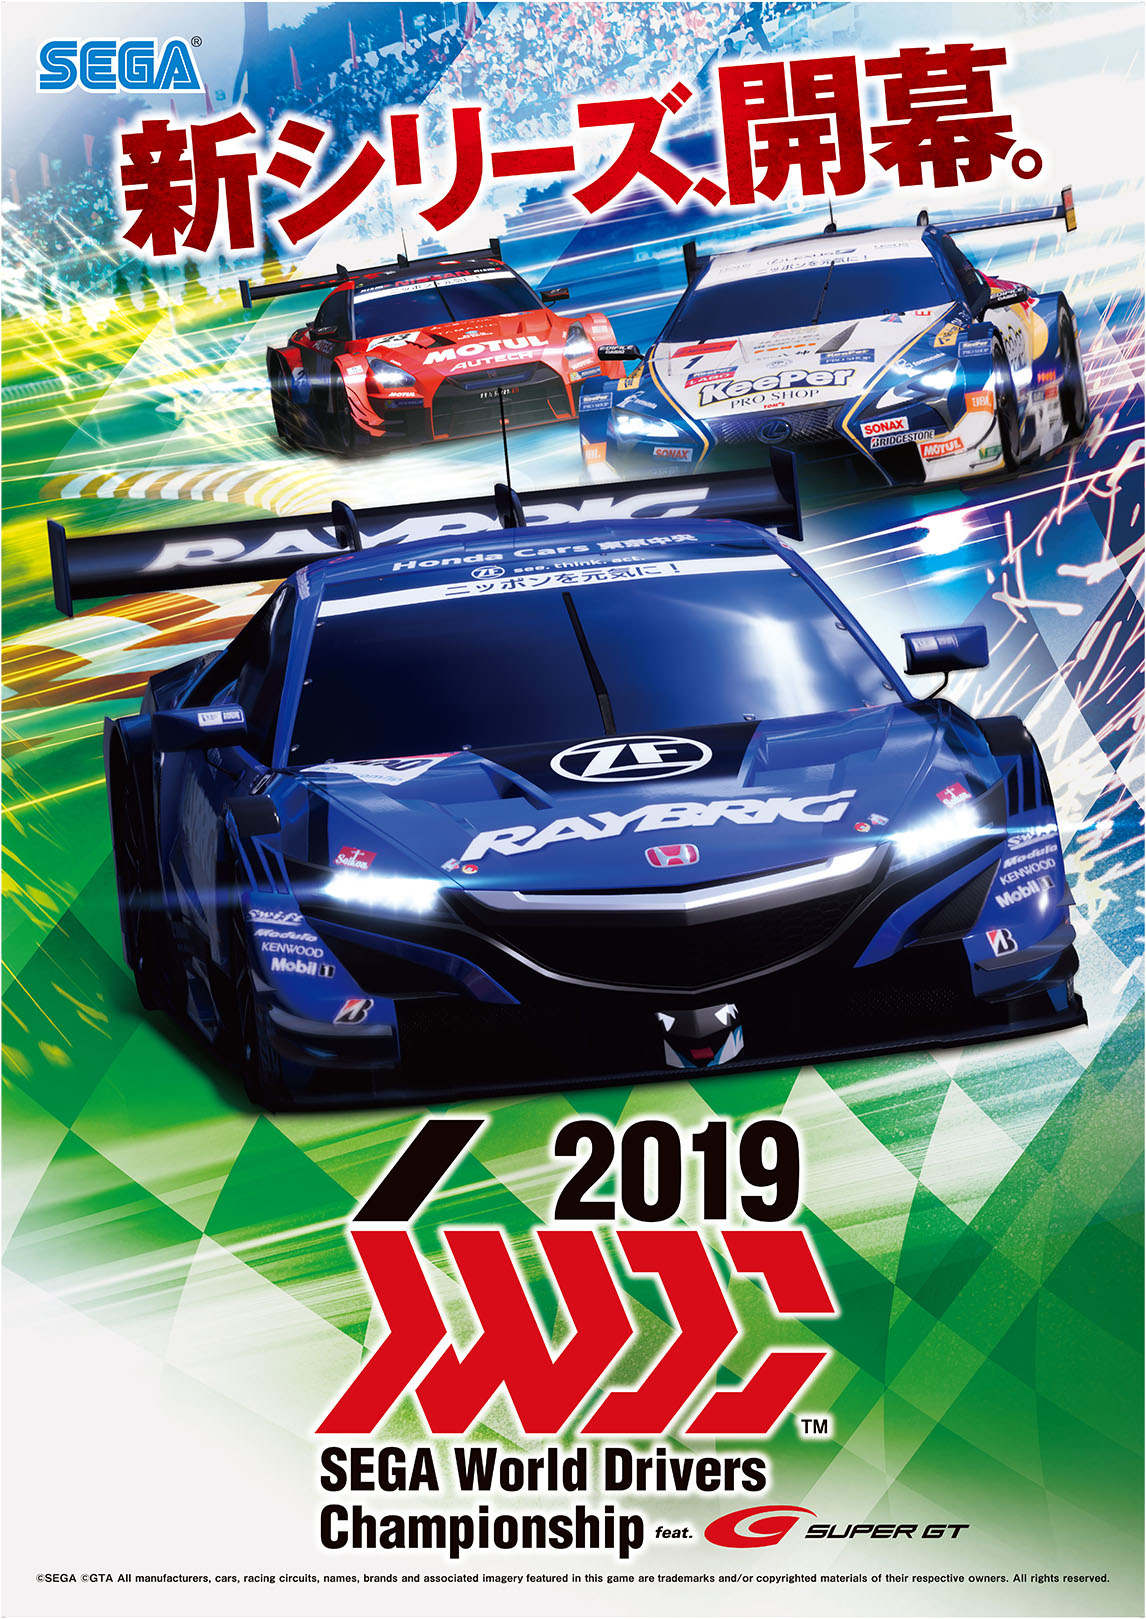 SEGA World Drivers Championship」、本日より新シリーズ「SWDC 2019 